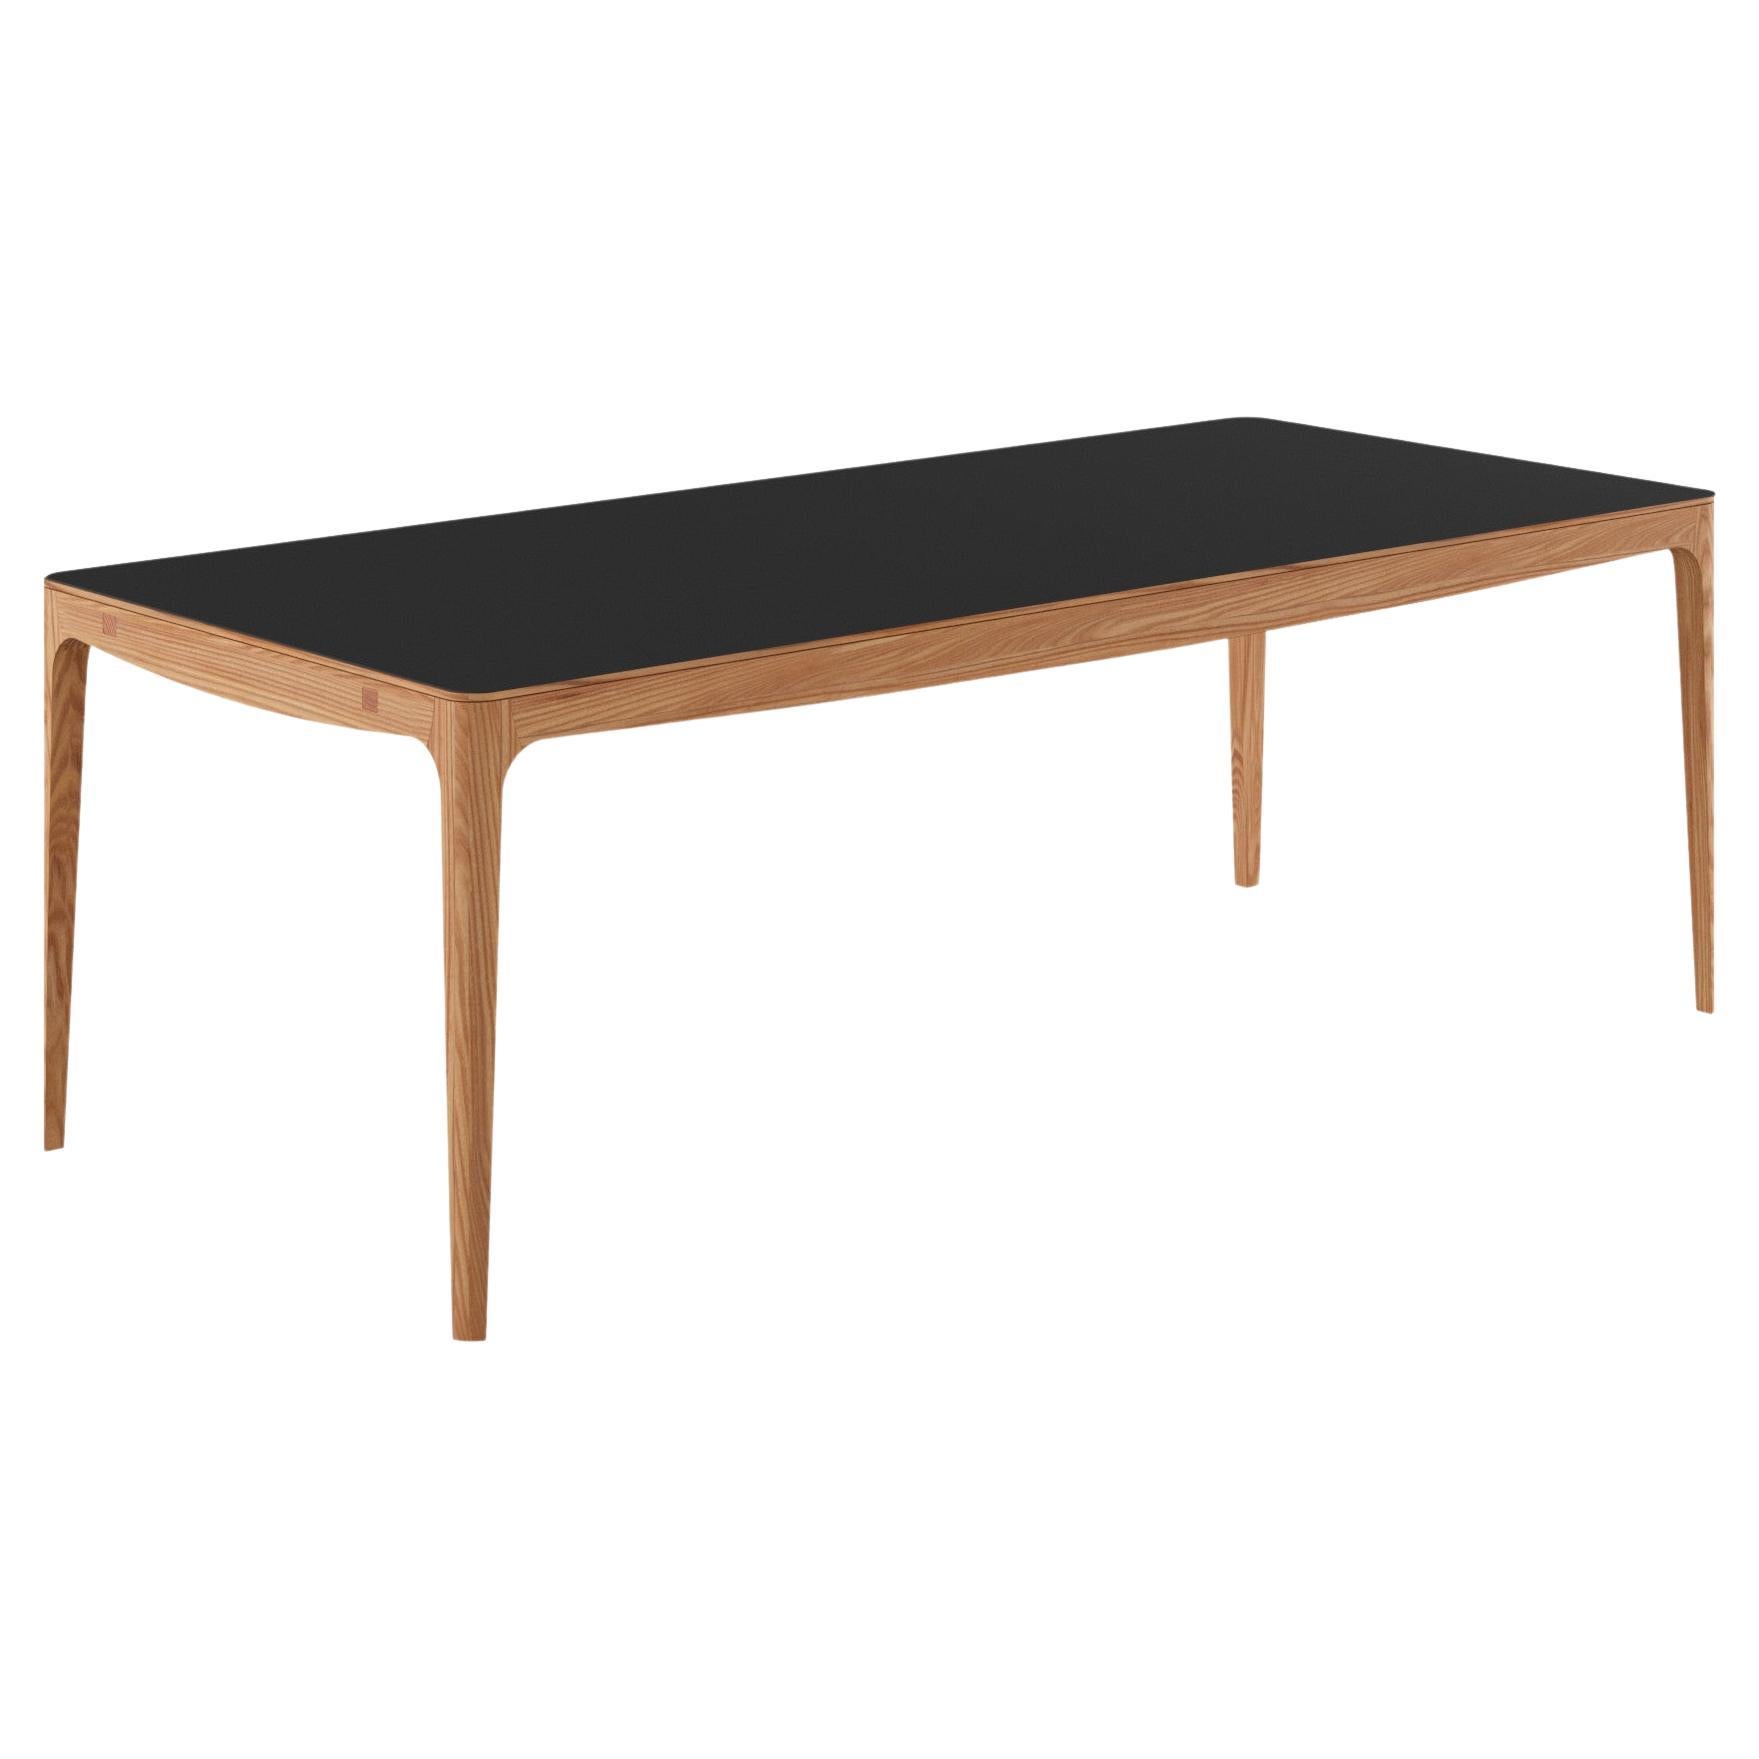 GM3700 RO Table, Elm, Black Fenix Laminate - Design by Hans Sandgren Jakobsen